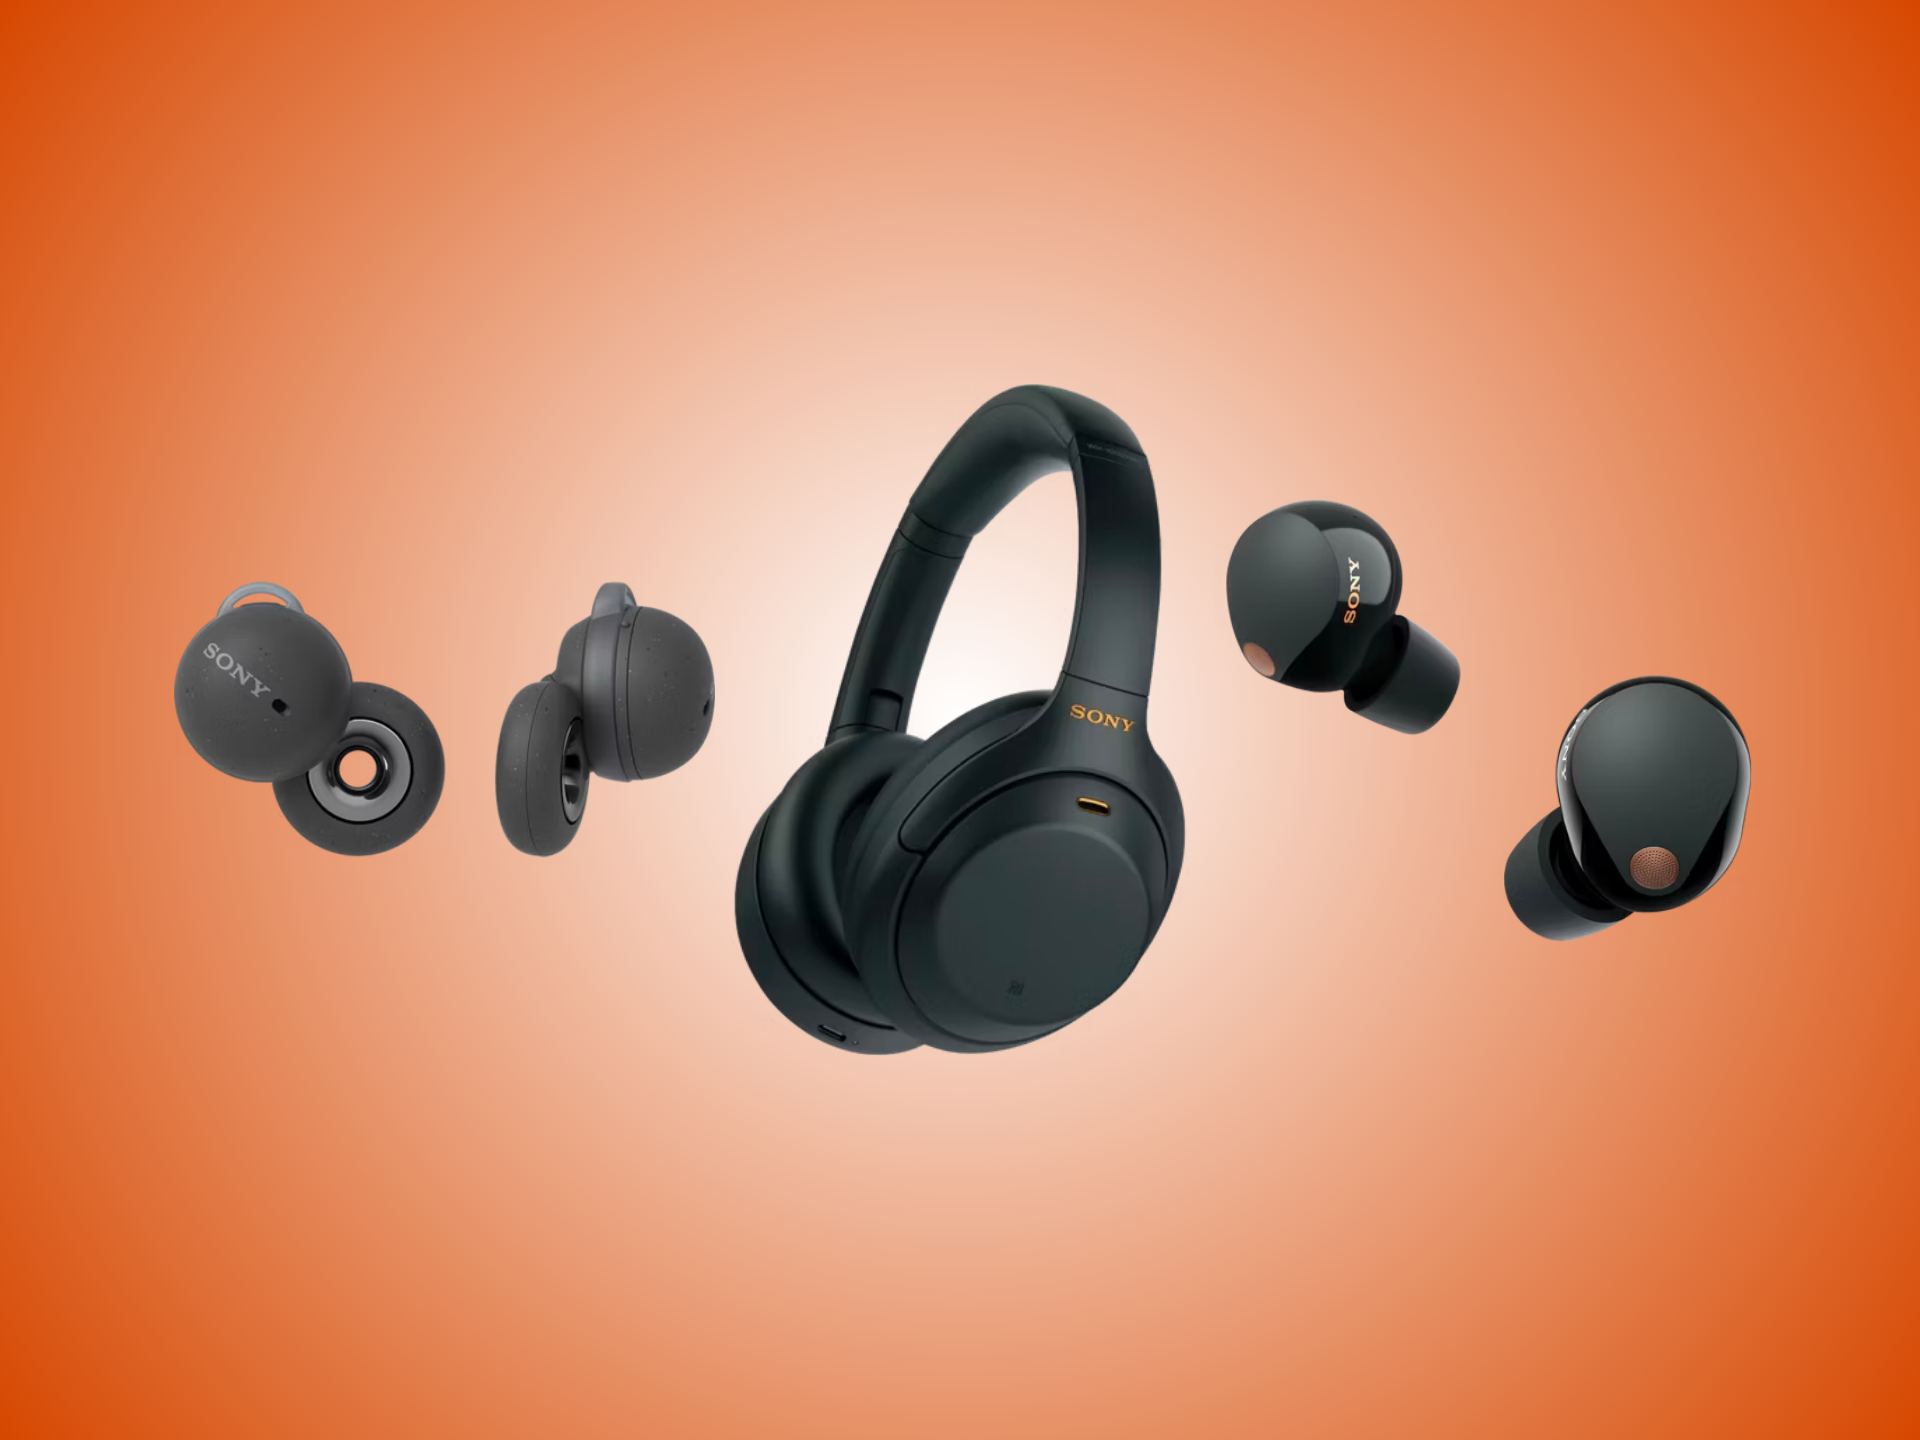 li-sony-wireless-earbuds-headphones-amazon-prime-deals